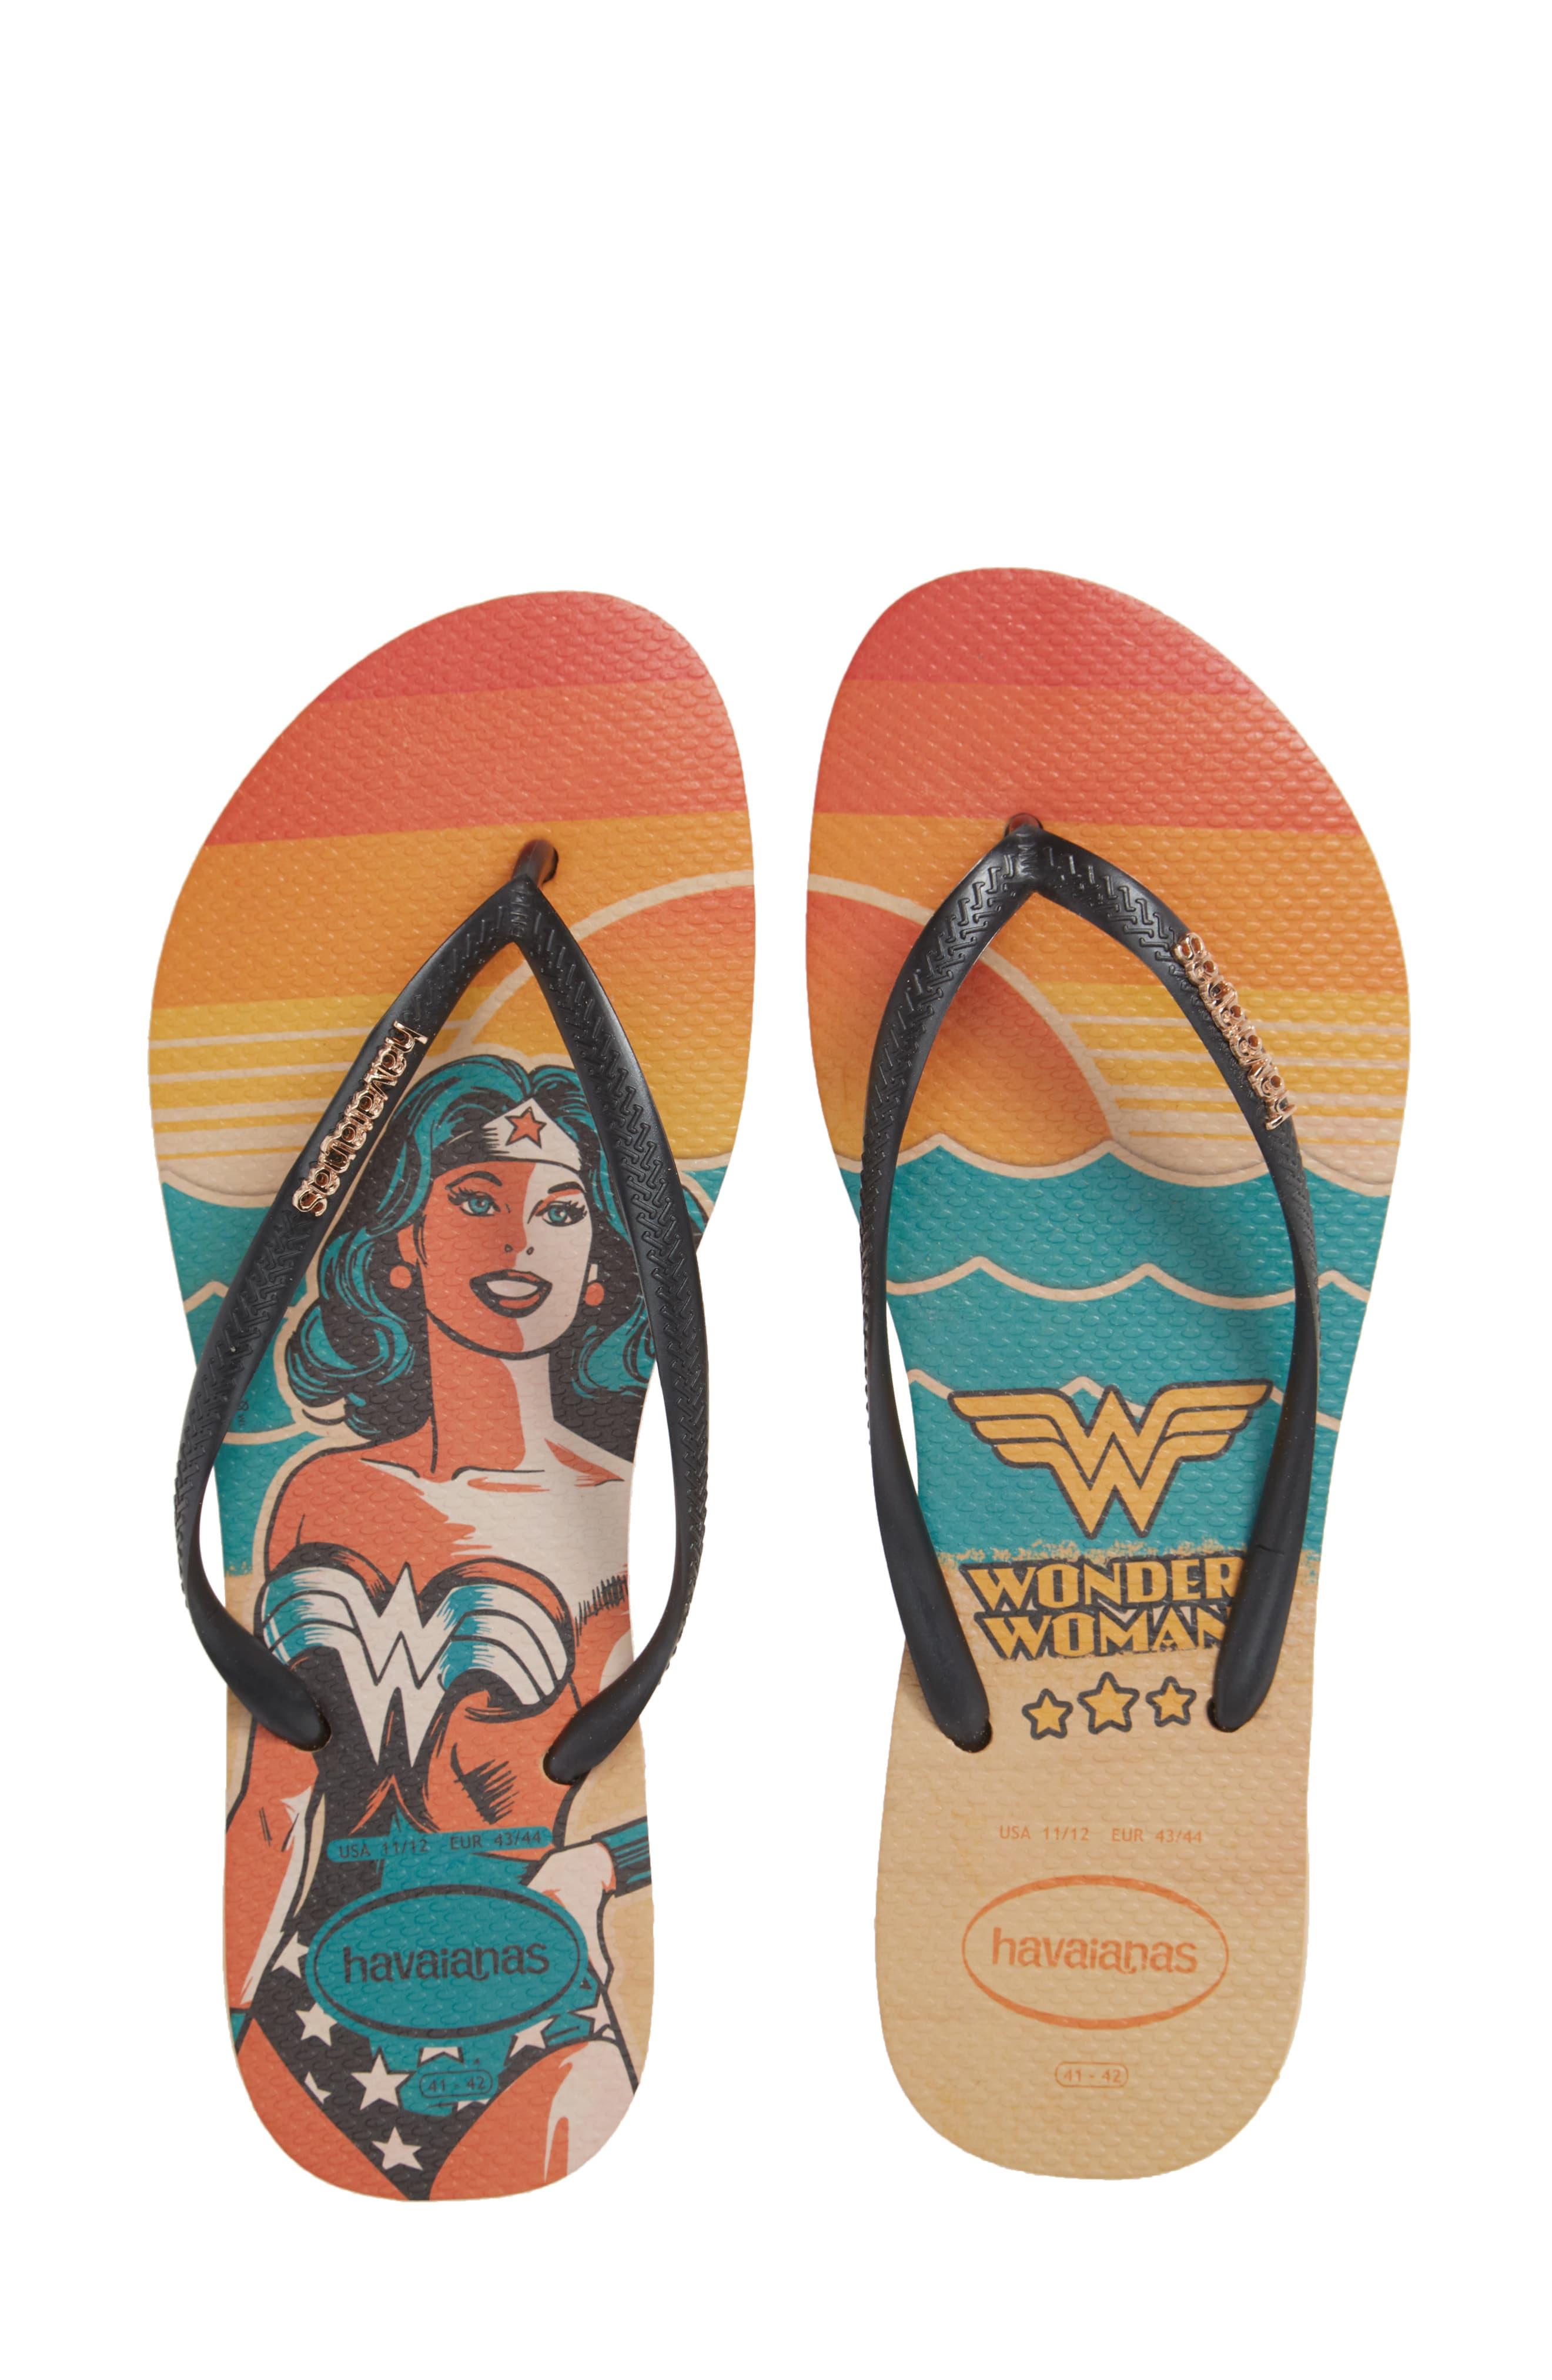 havaianas wonder woman flip flops